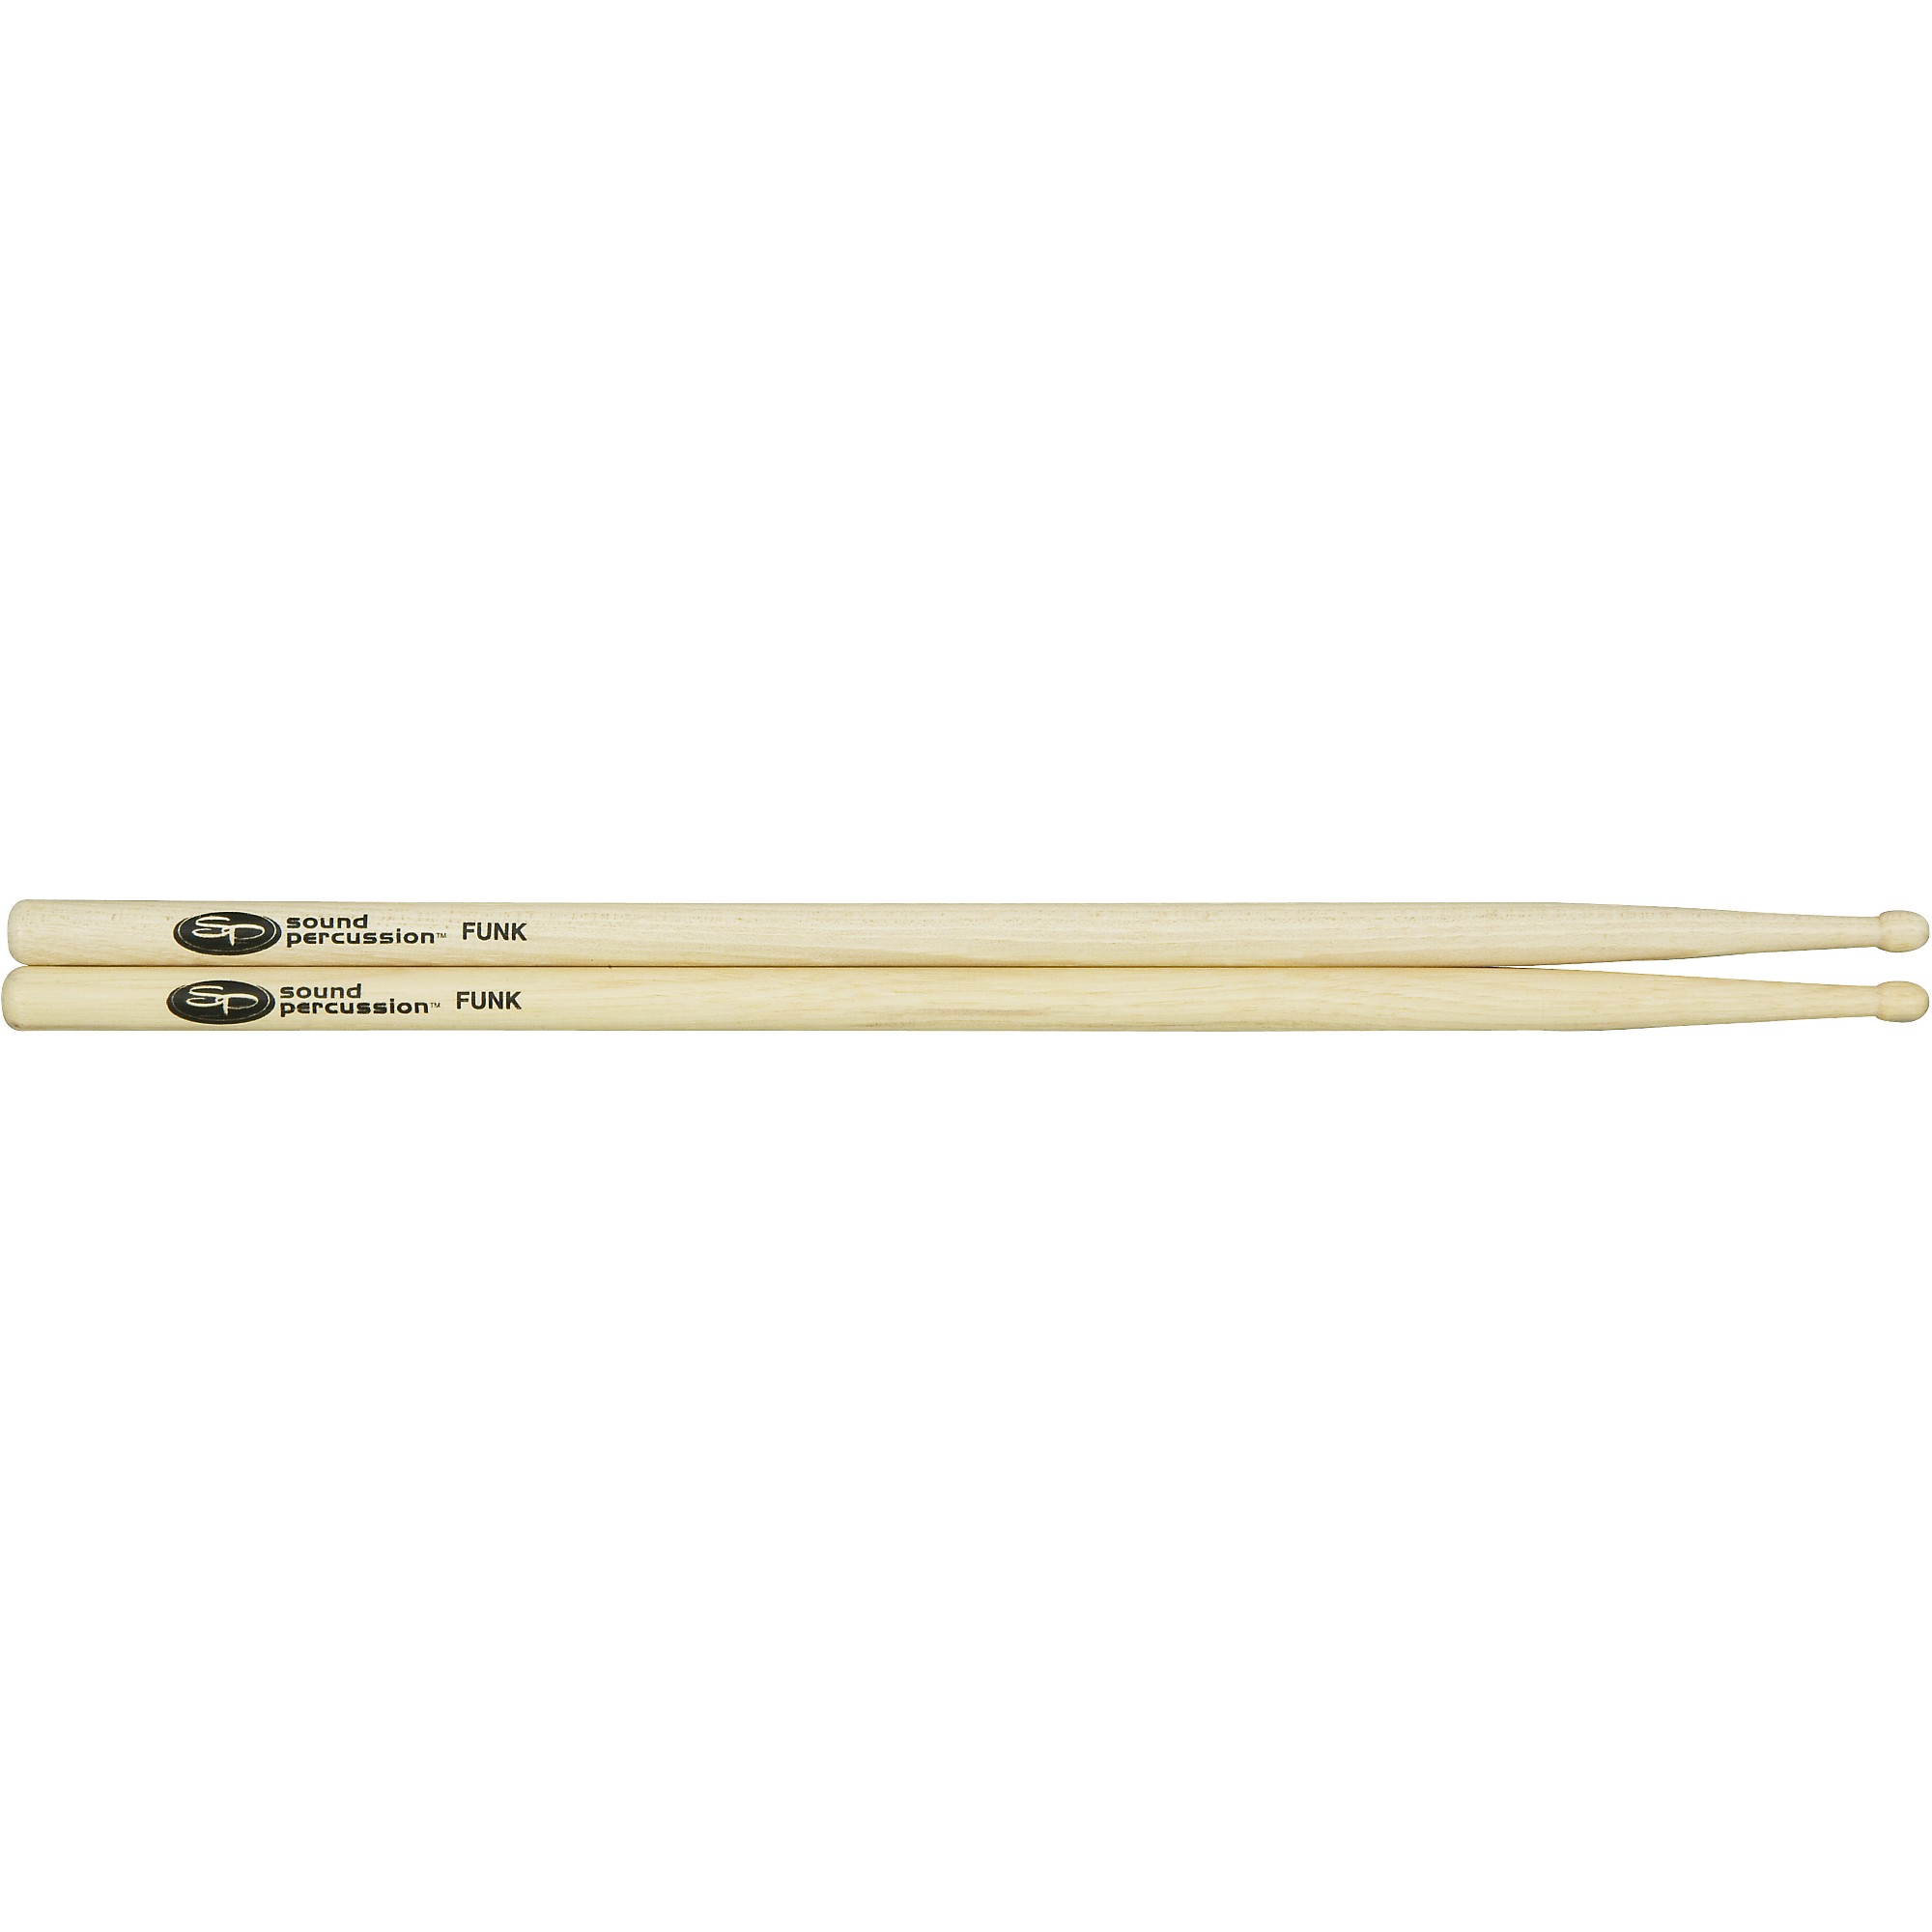 SPFUNK Hickory Drumsticks – FUNK Wood Pair